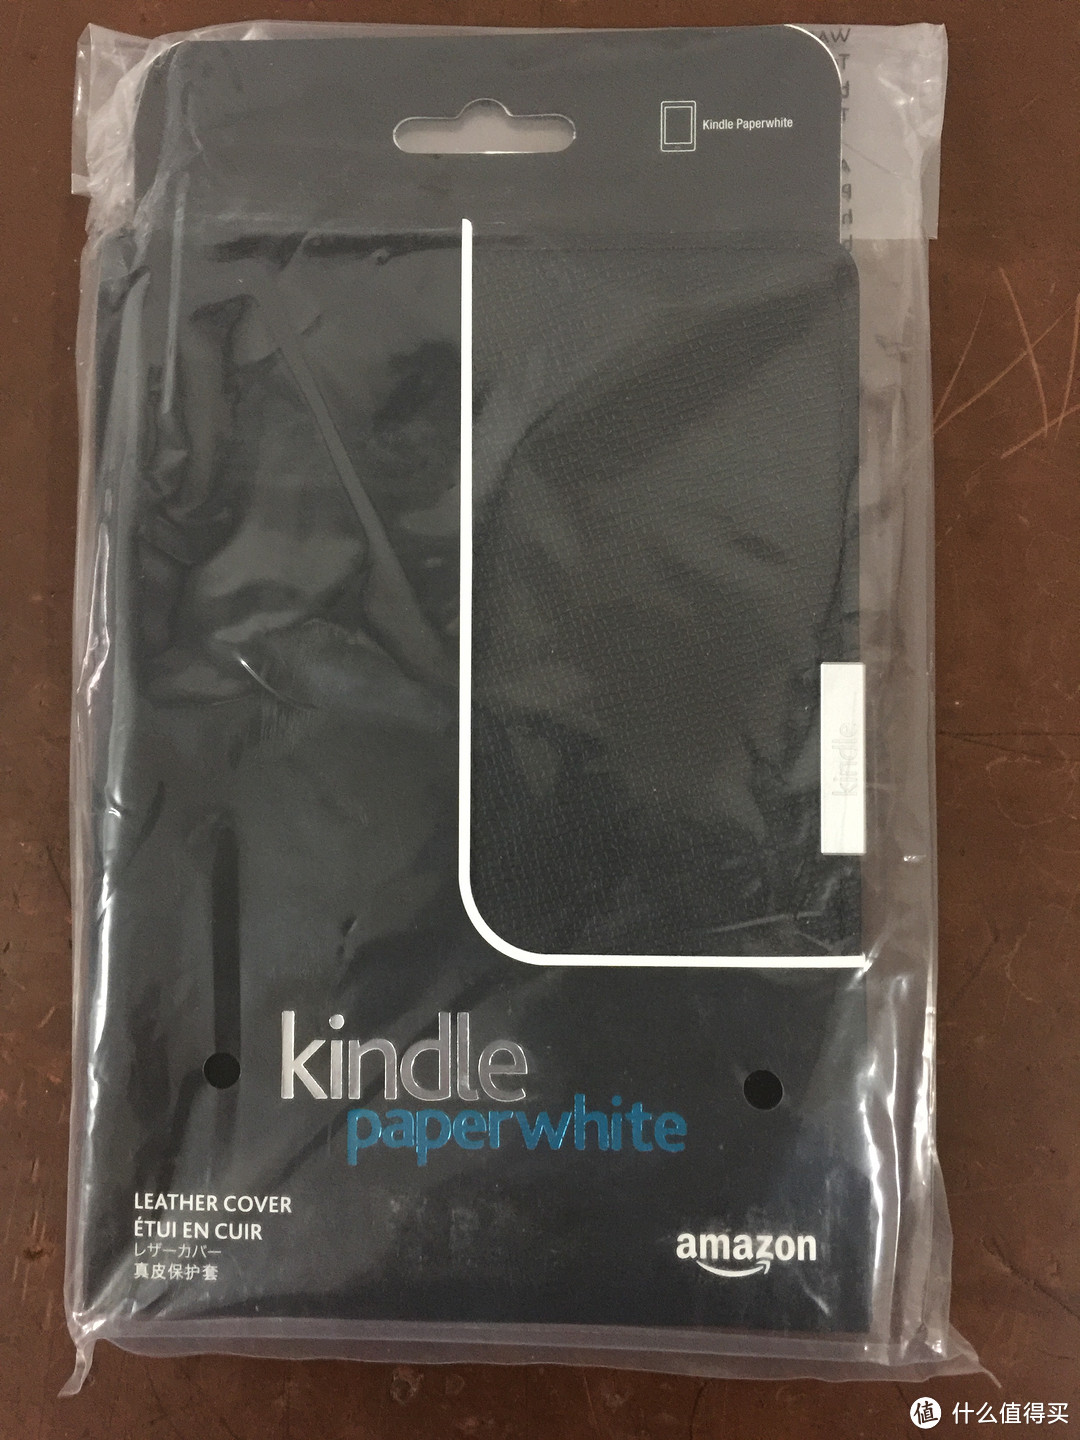 Kindle Paperwhite 原装皮套开箱